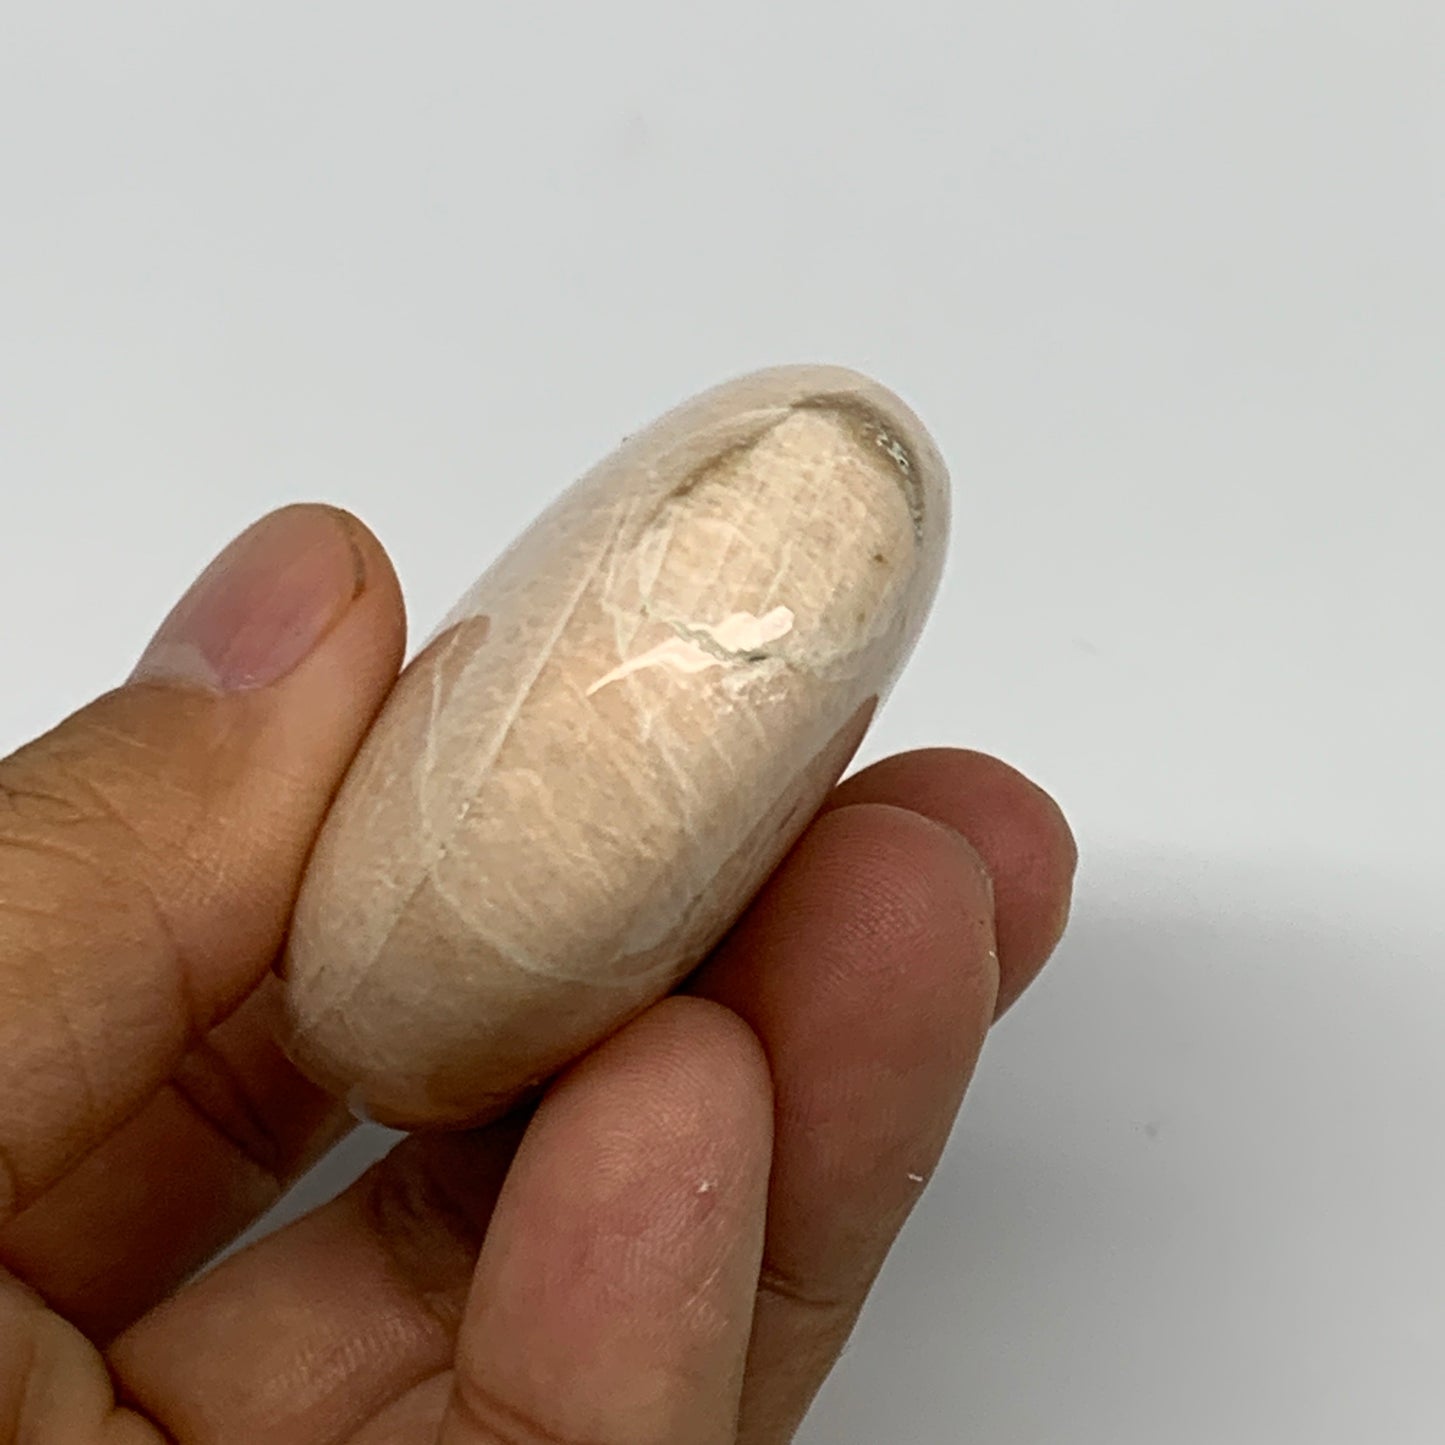 97.1g,2.6"x1.8"x0.9" White Moonstone Crystal Palm-Stone Polished Reiki, B21963